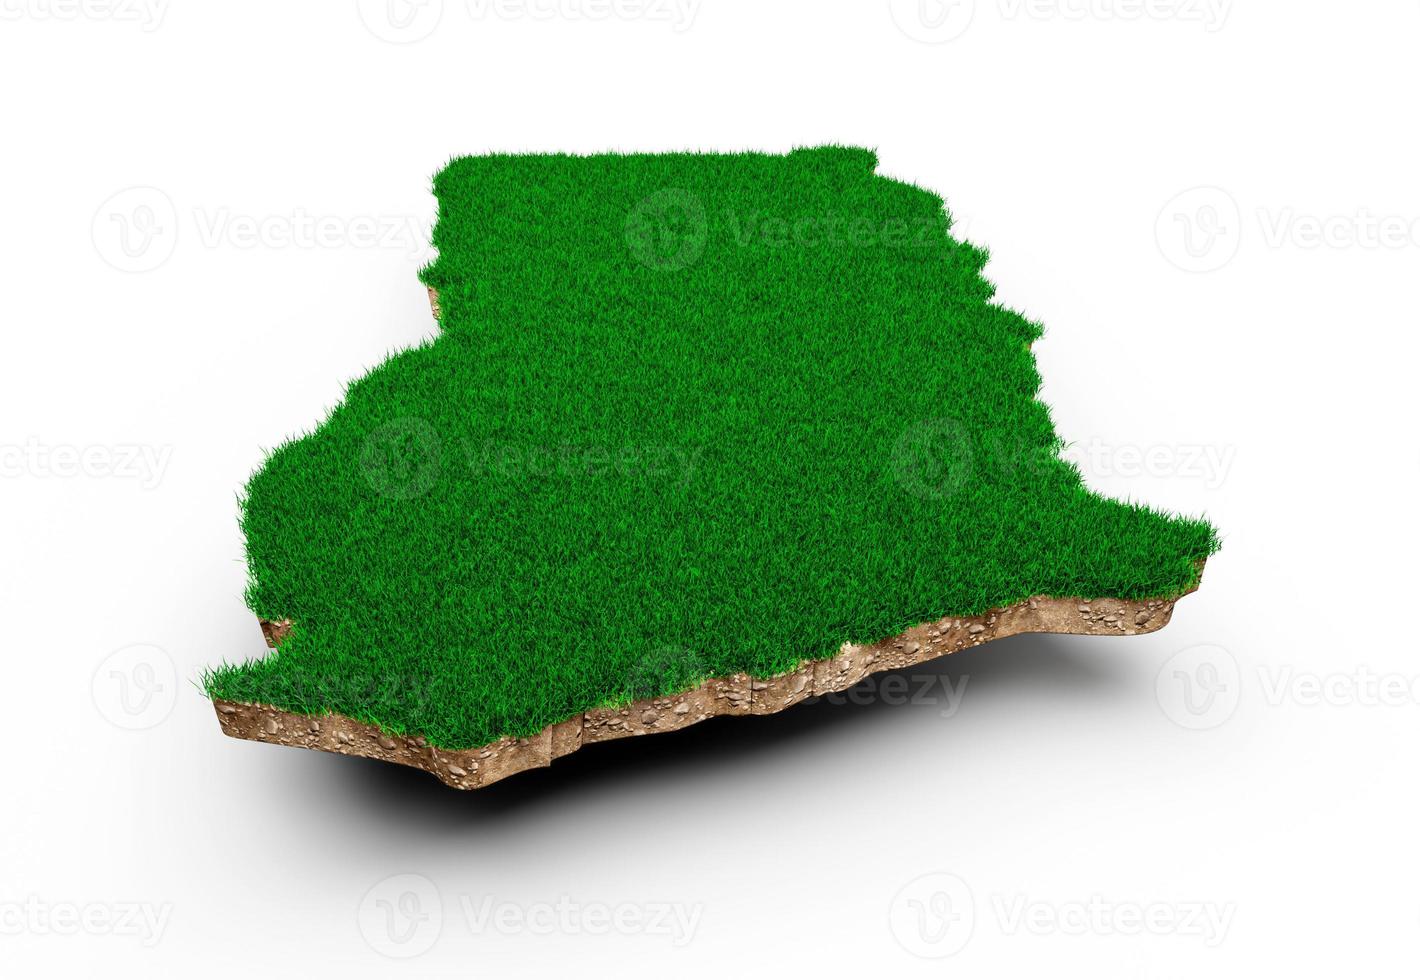 Ghana kaart bodem land geologie dwarsdoorsnede met groen gras en rotsgrond textuur 3d illustratie foto